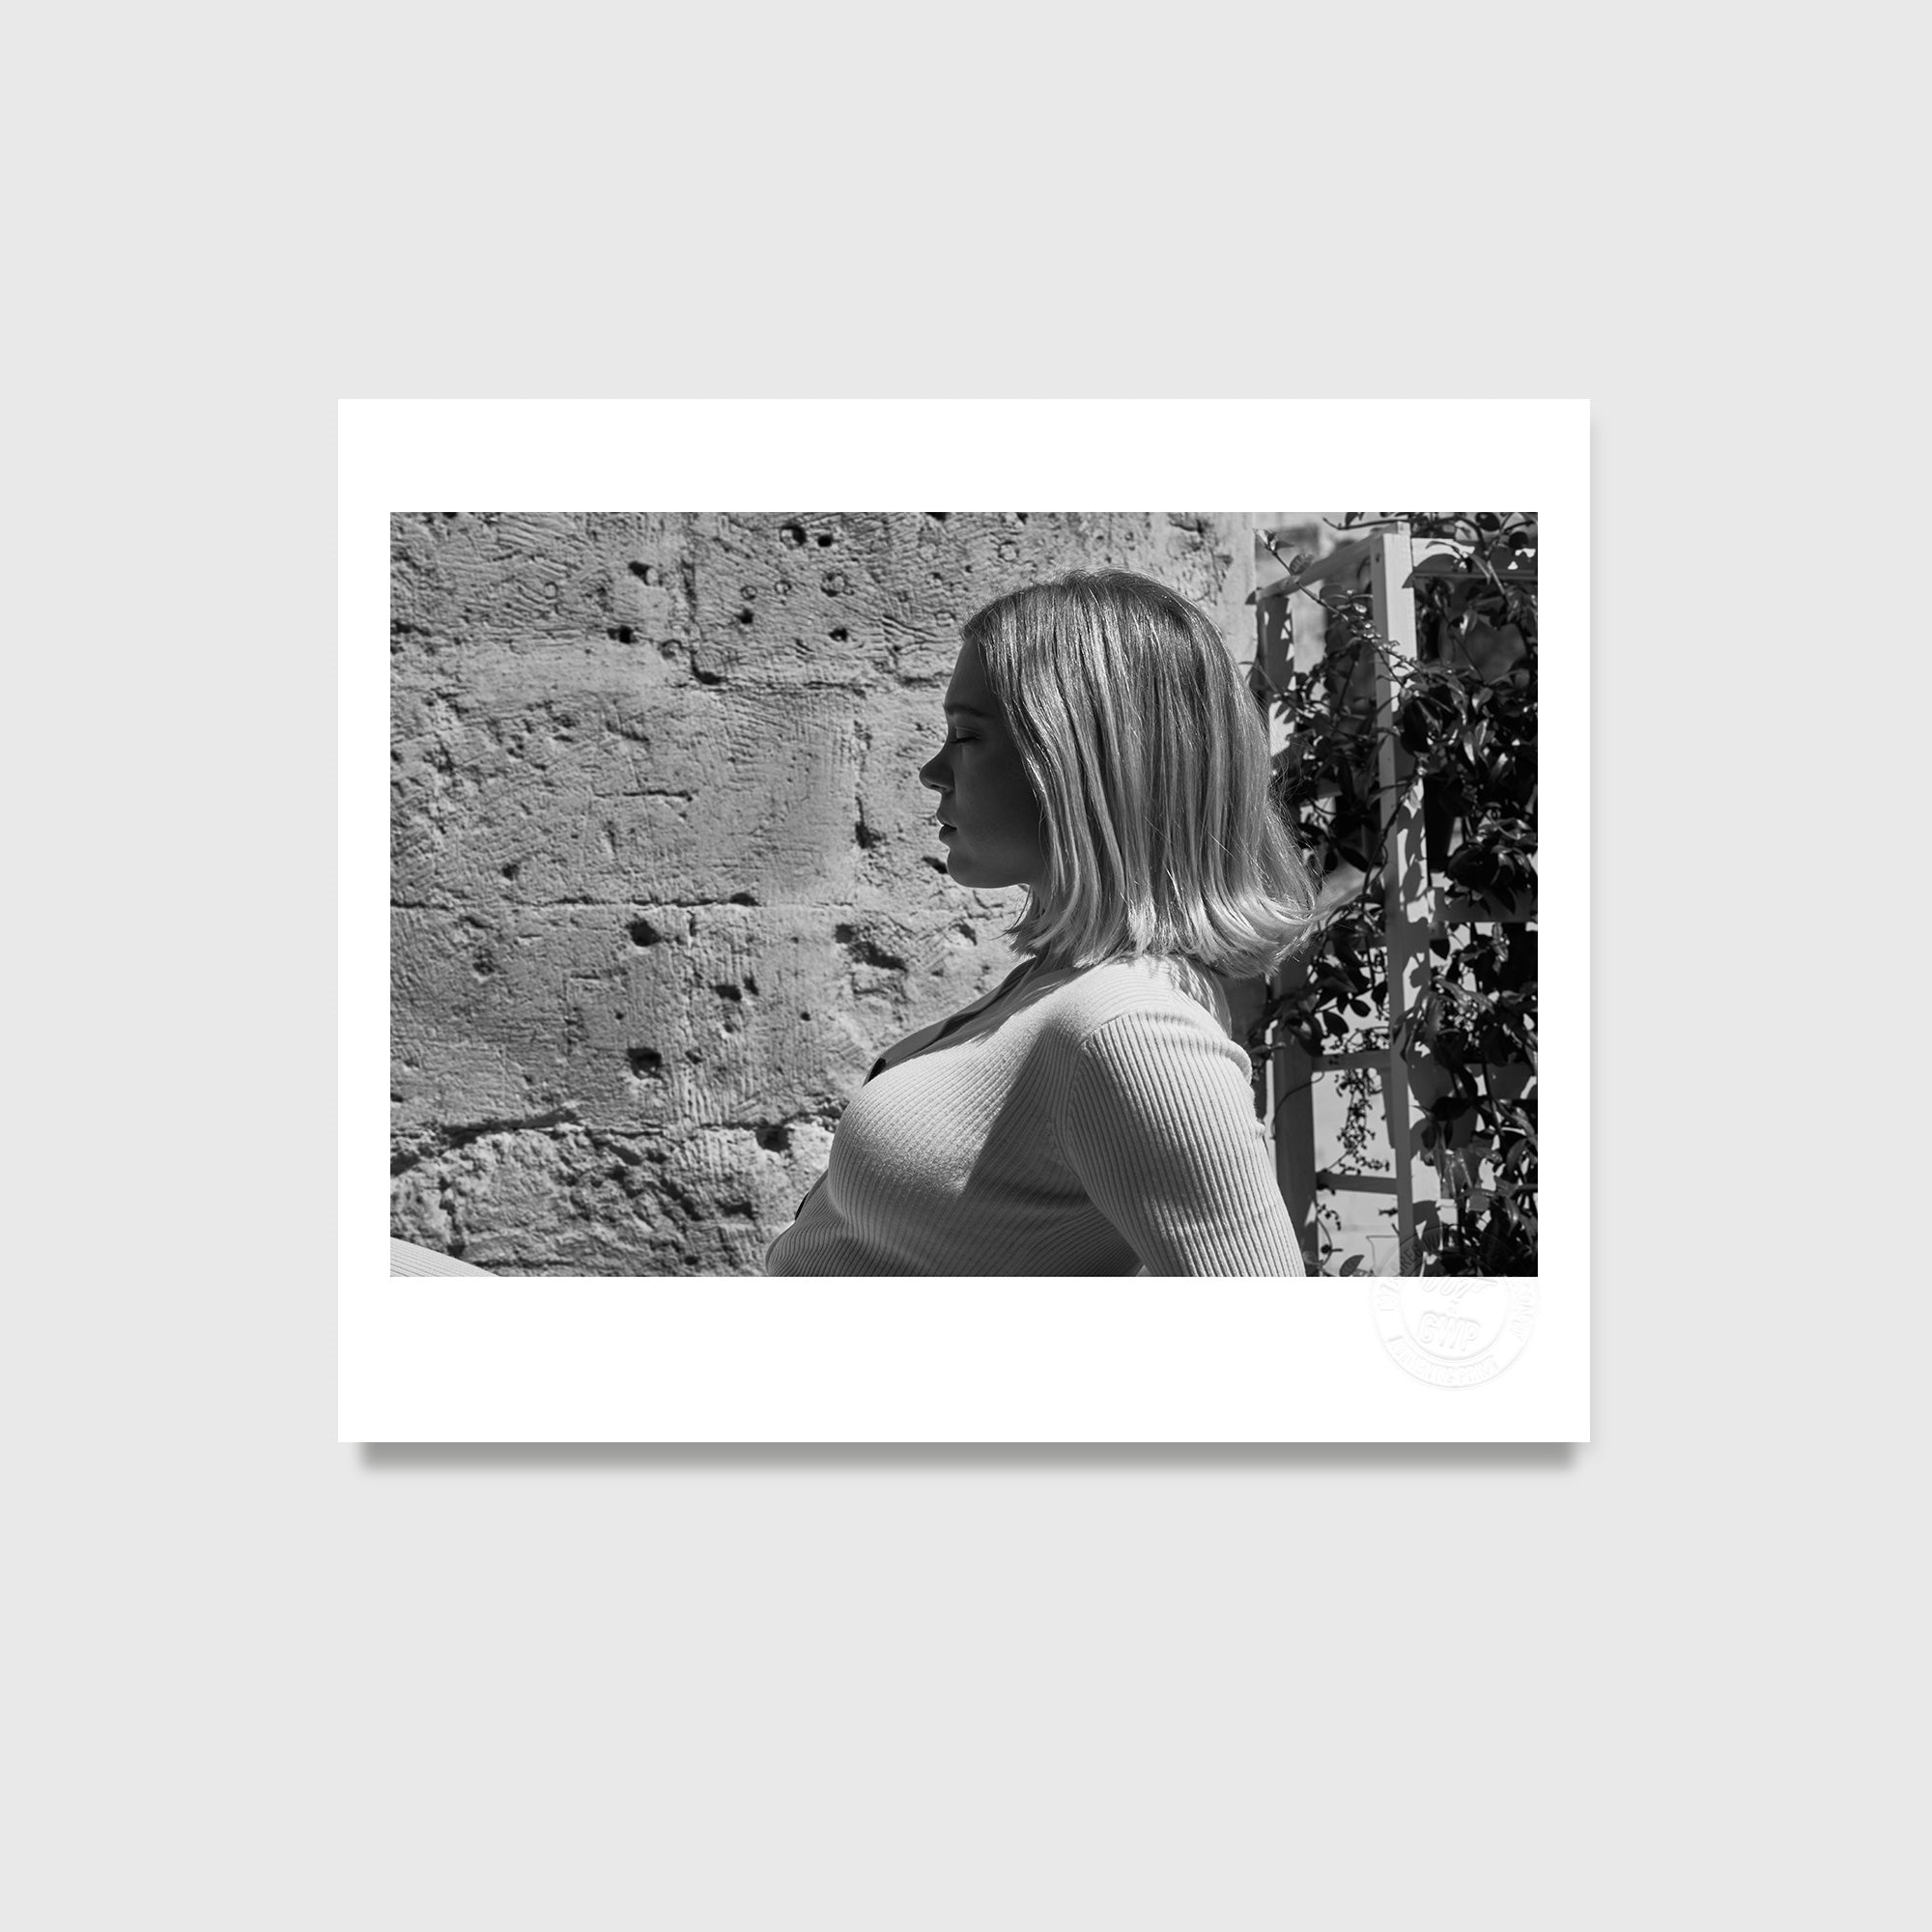 Léa Seydoux (@lea_seydoux) / X